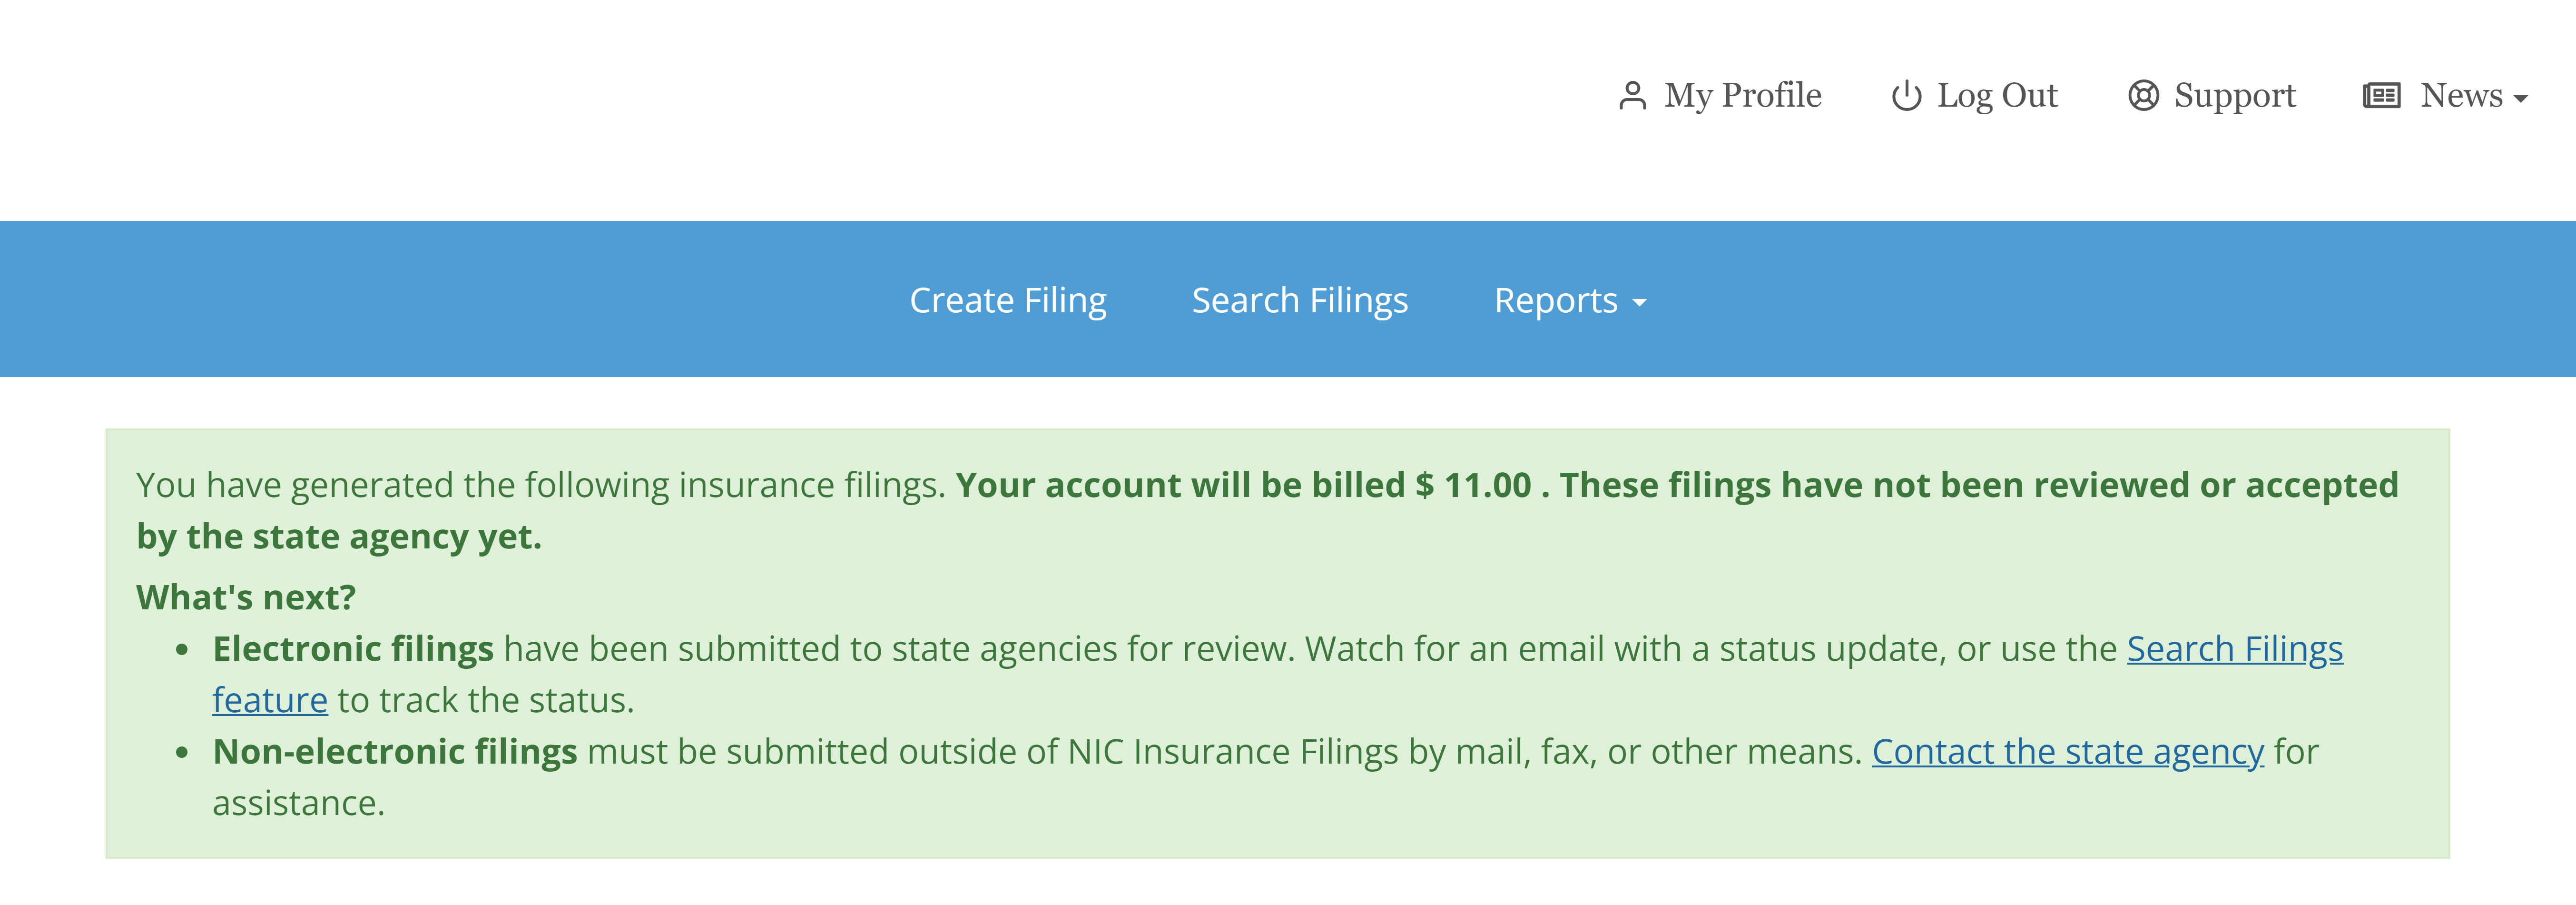 Screenshot of NIC Insurance Filings Create Filing summary page.